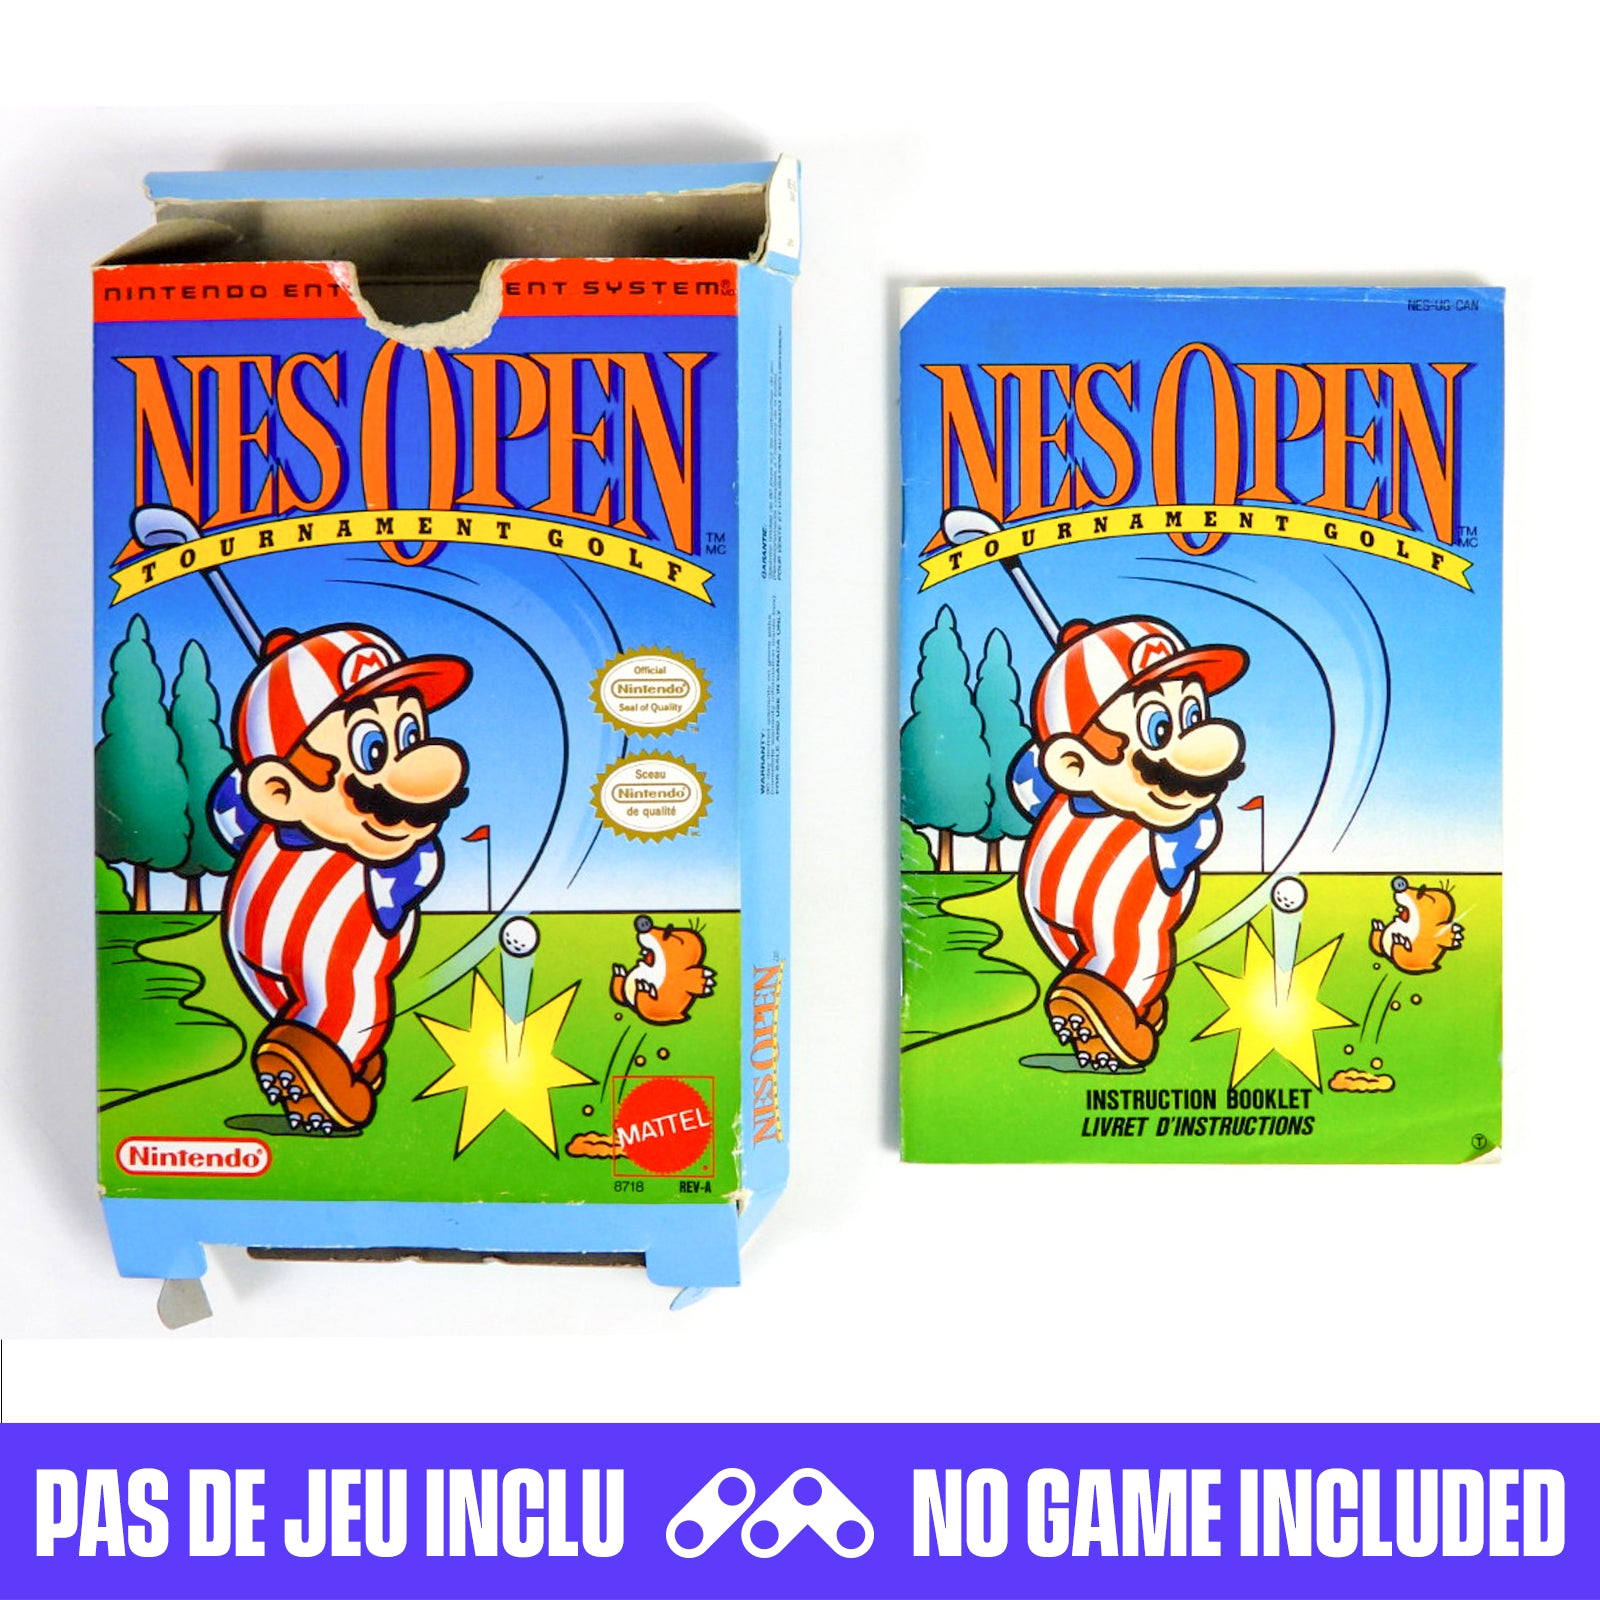 NES Open Tournament Golf [Box] (Nintendo / NES) – RetroMTL